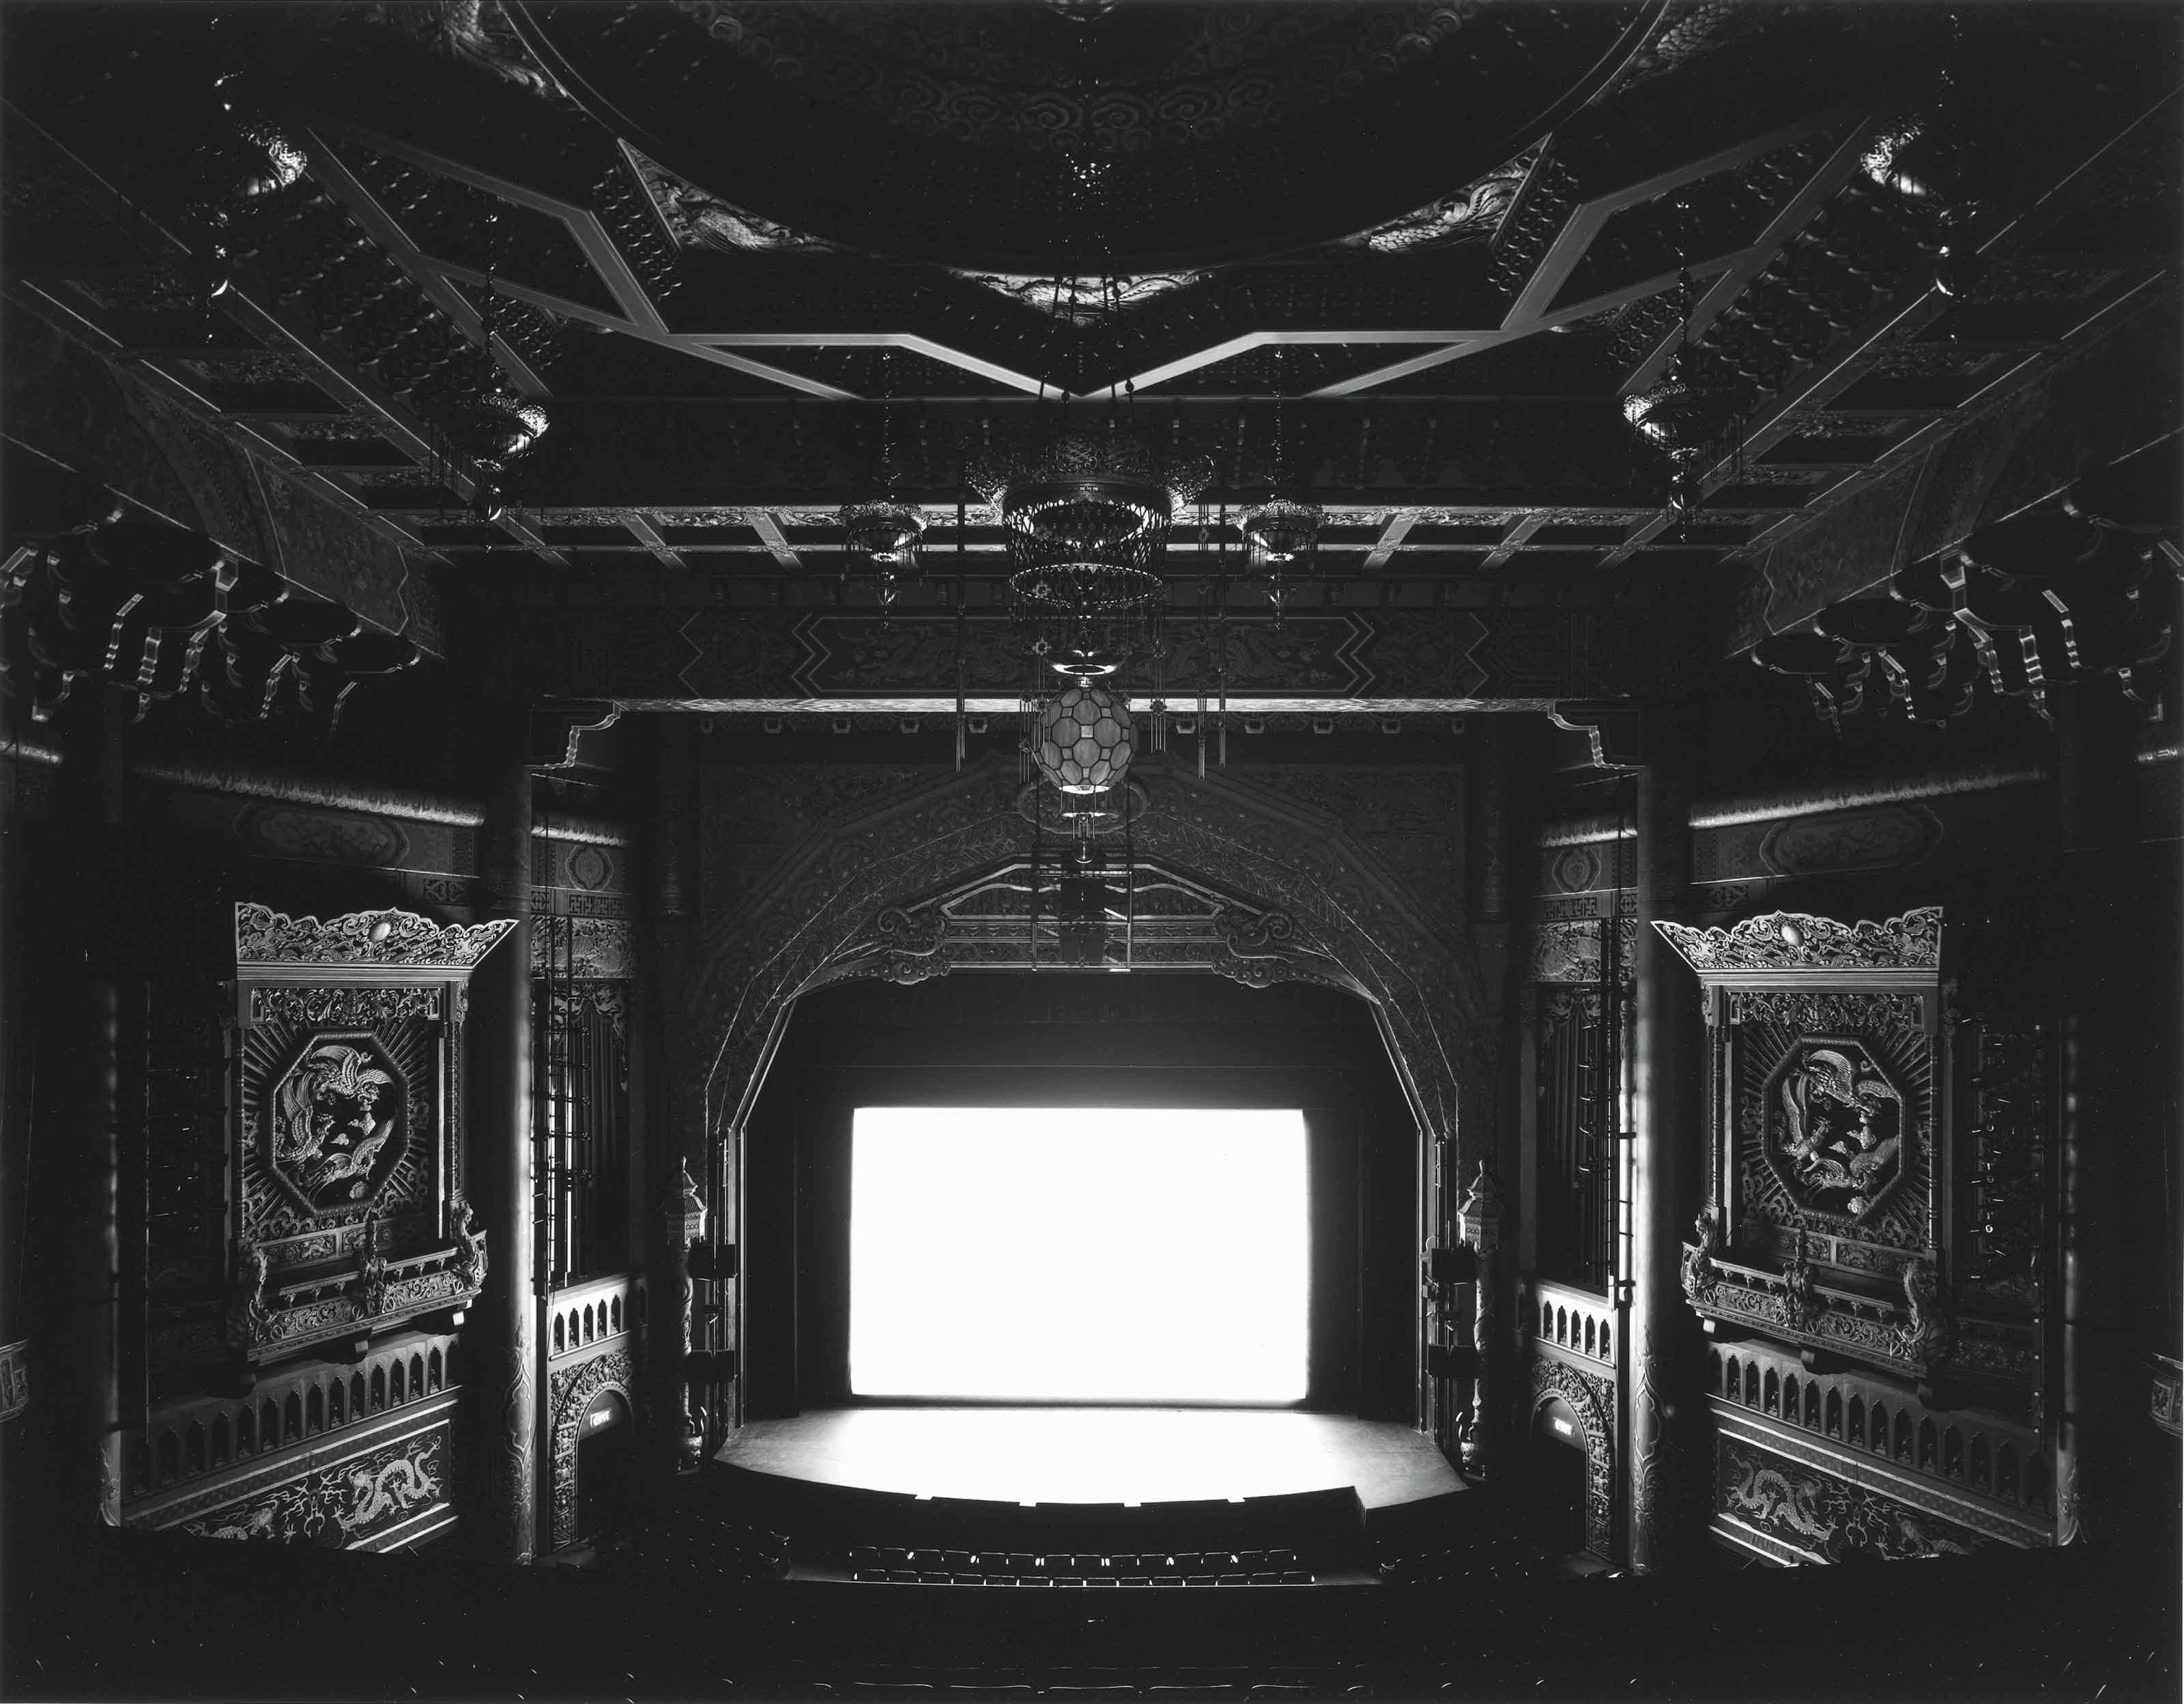 Fifth Avenue Theater, Seattle – Hiroshi Sugimoto, Cinema, Photography, B/W